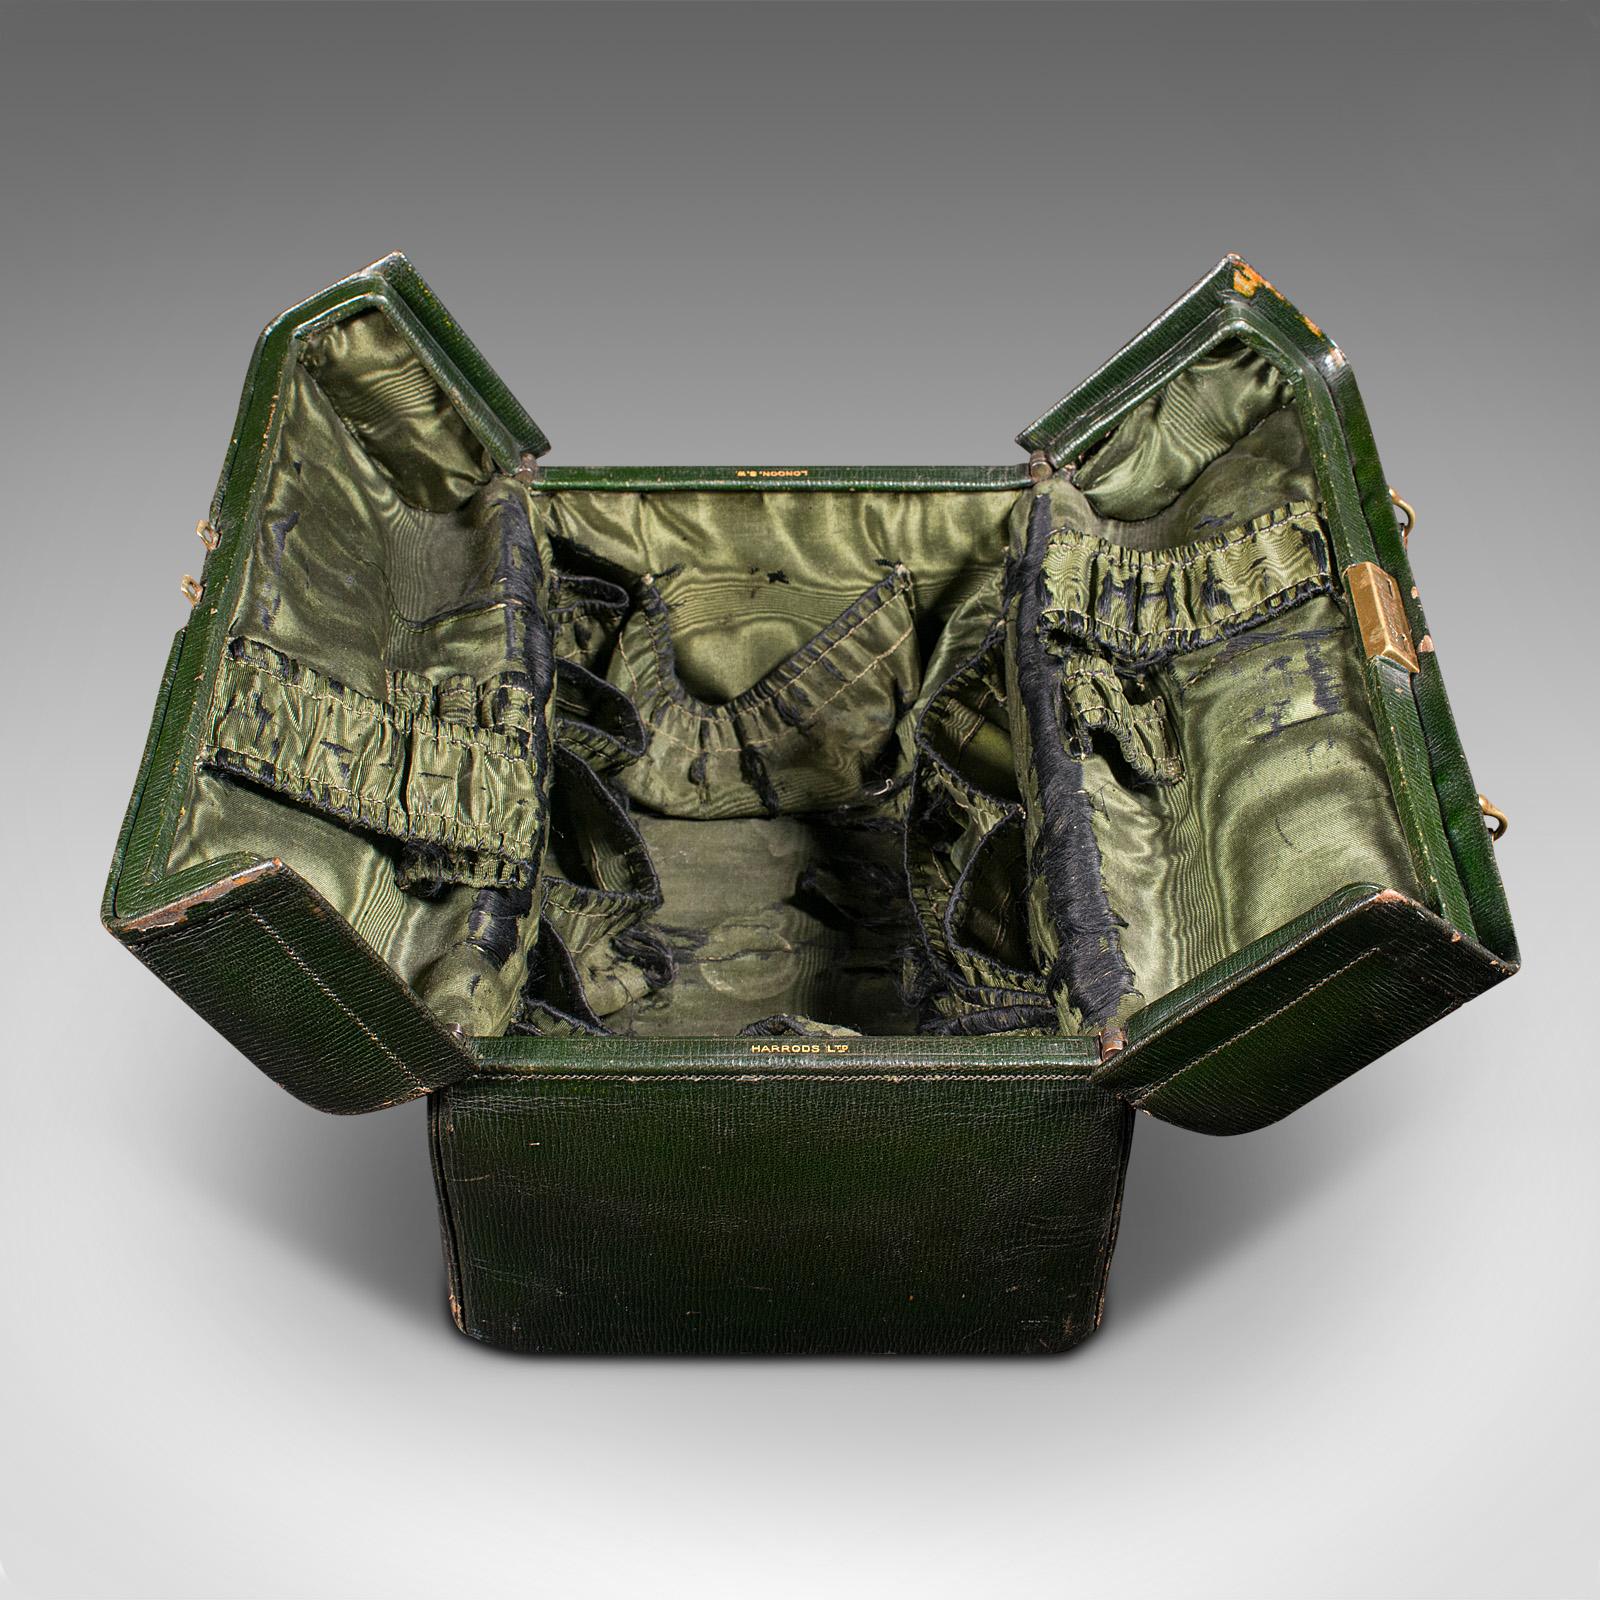 Antique Toiletry Case, English, Leather, Vanity Bag, Harrods, London, Edwardian 1